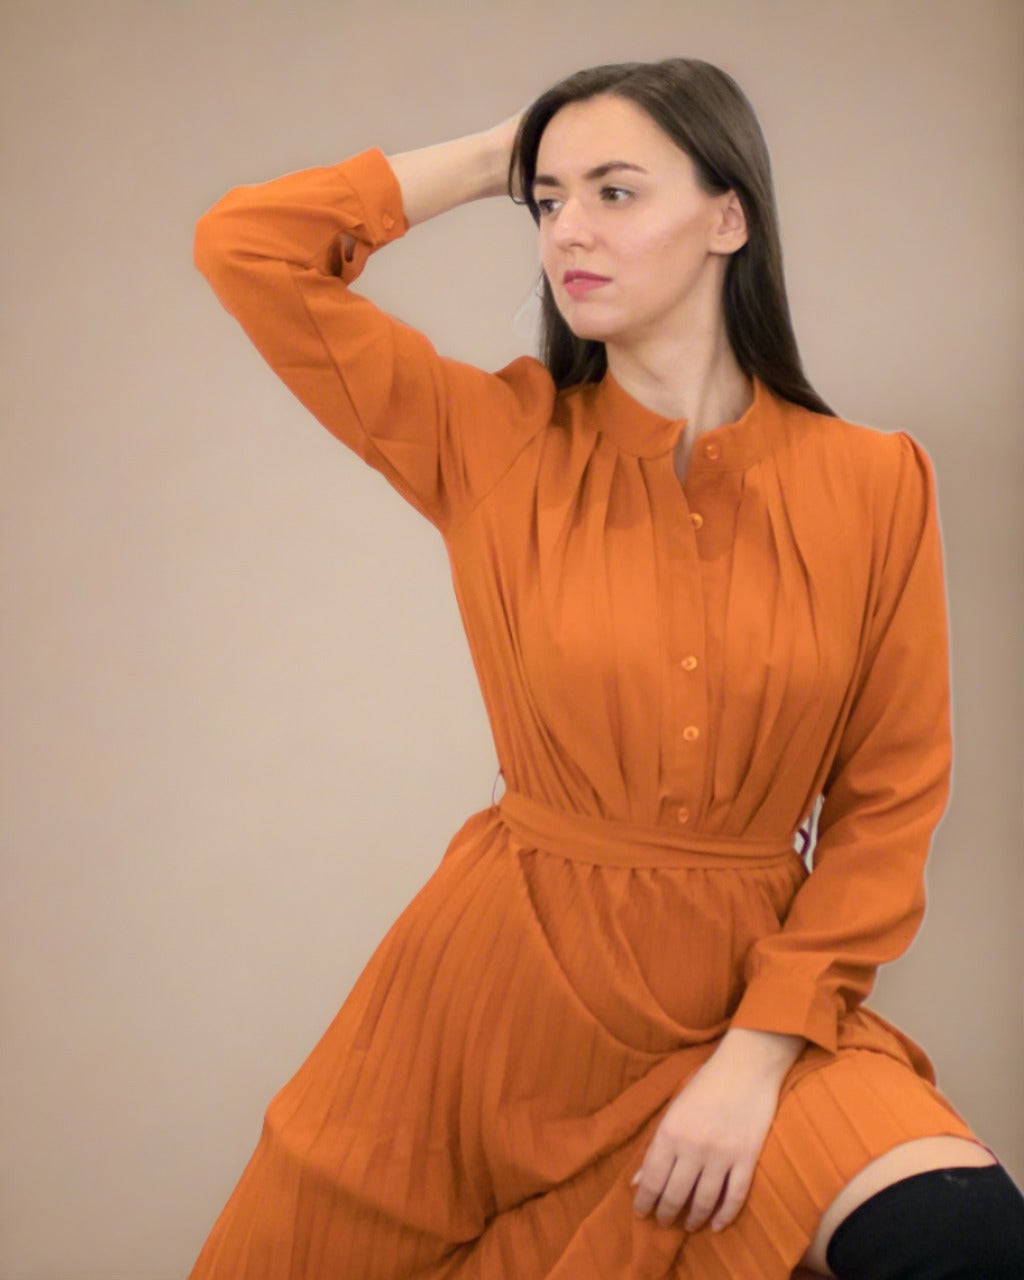 Ania Burnt Orange Maxi Dress with Pleats - Long Sleeve Dress